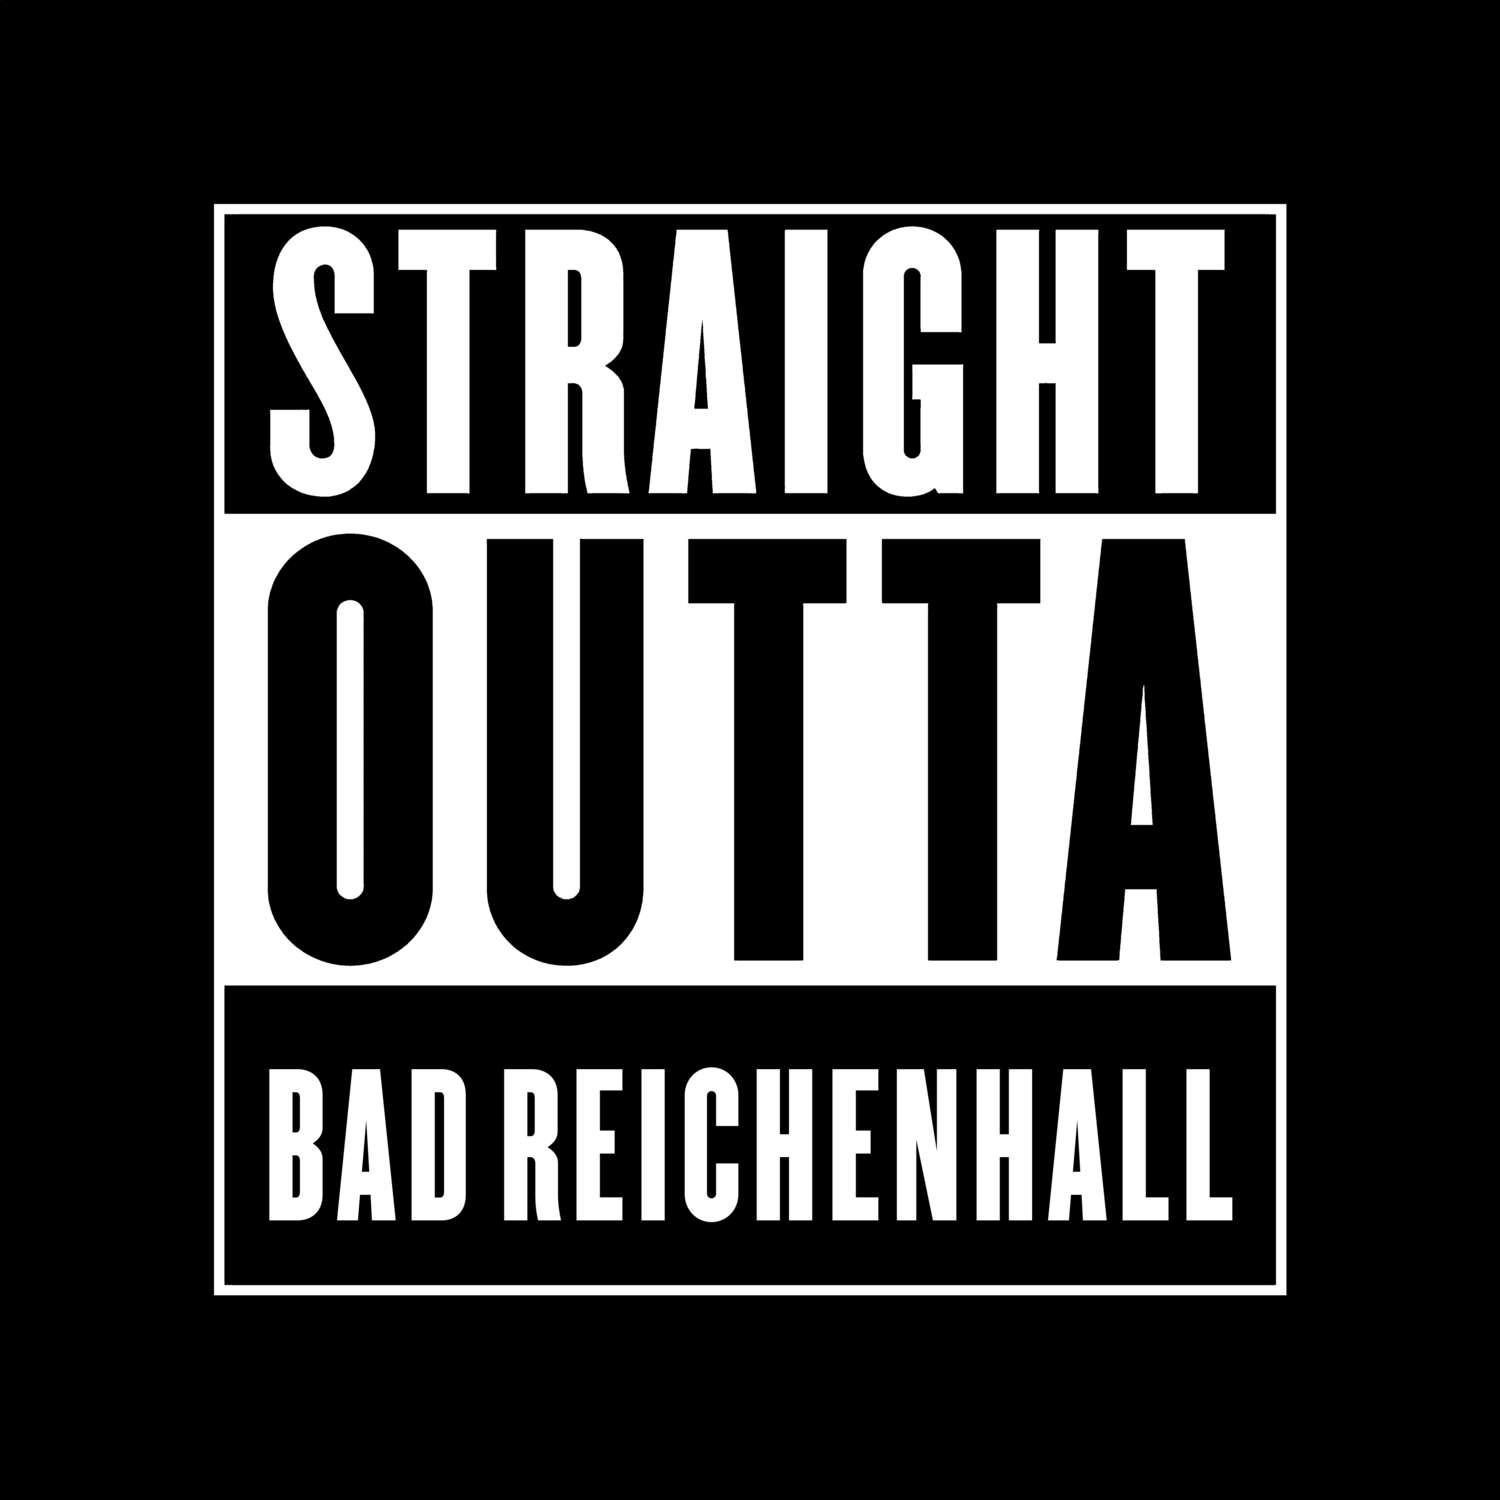 Bad Reichenhall T-Shirt »Straight Outta«